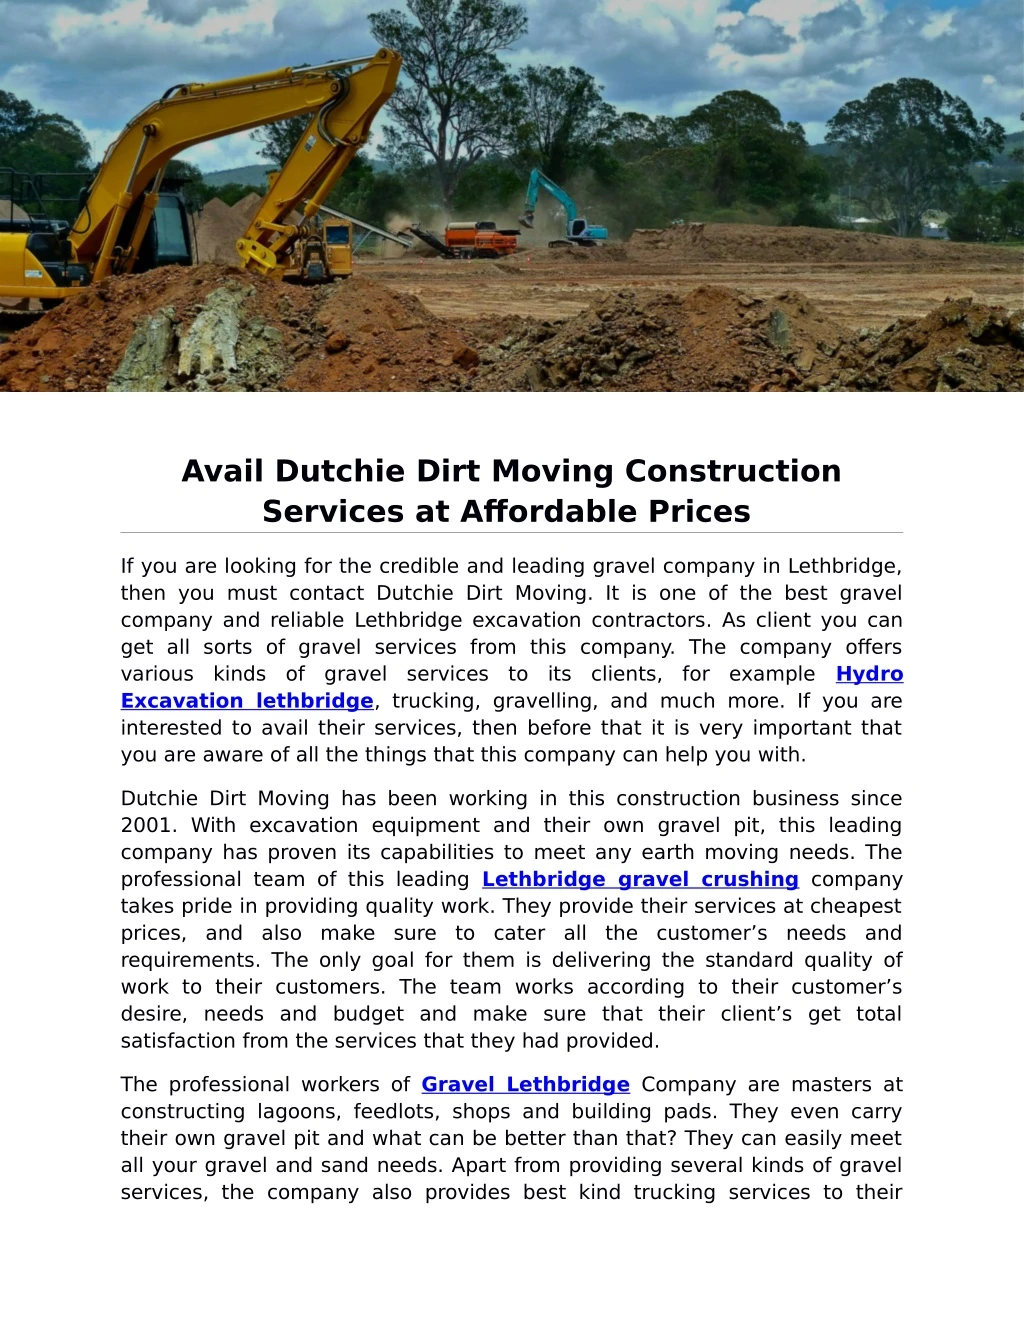 avail dutchie dirt moving construction services